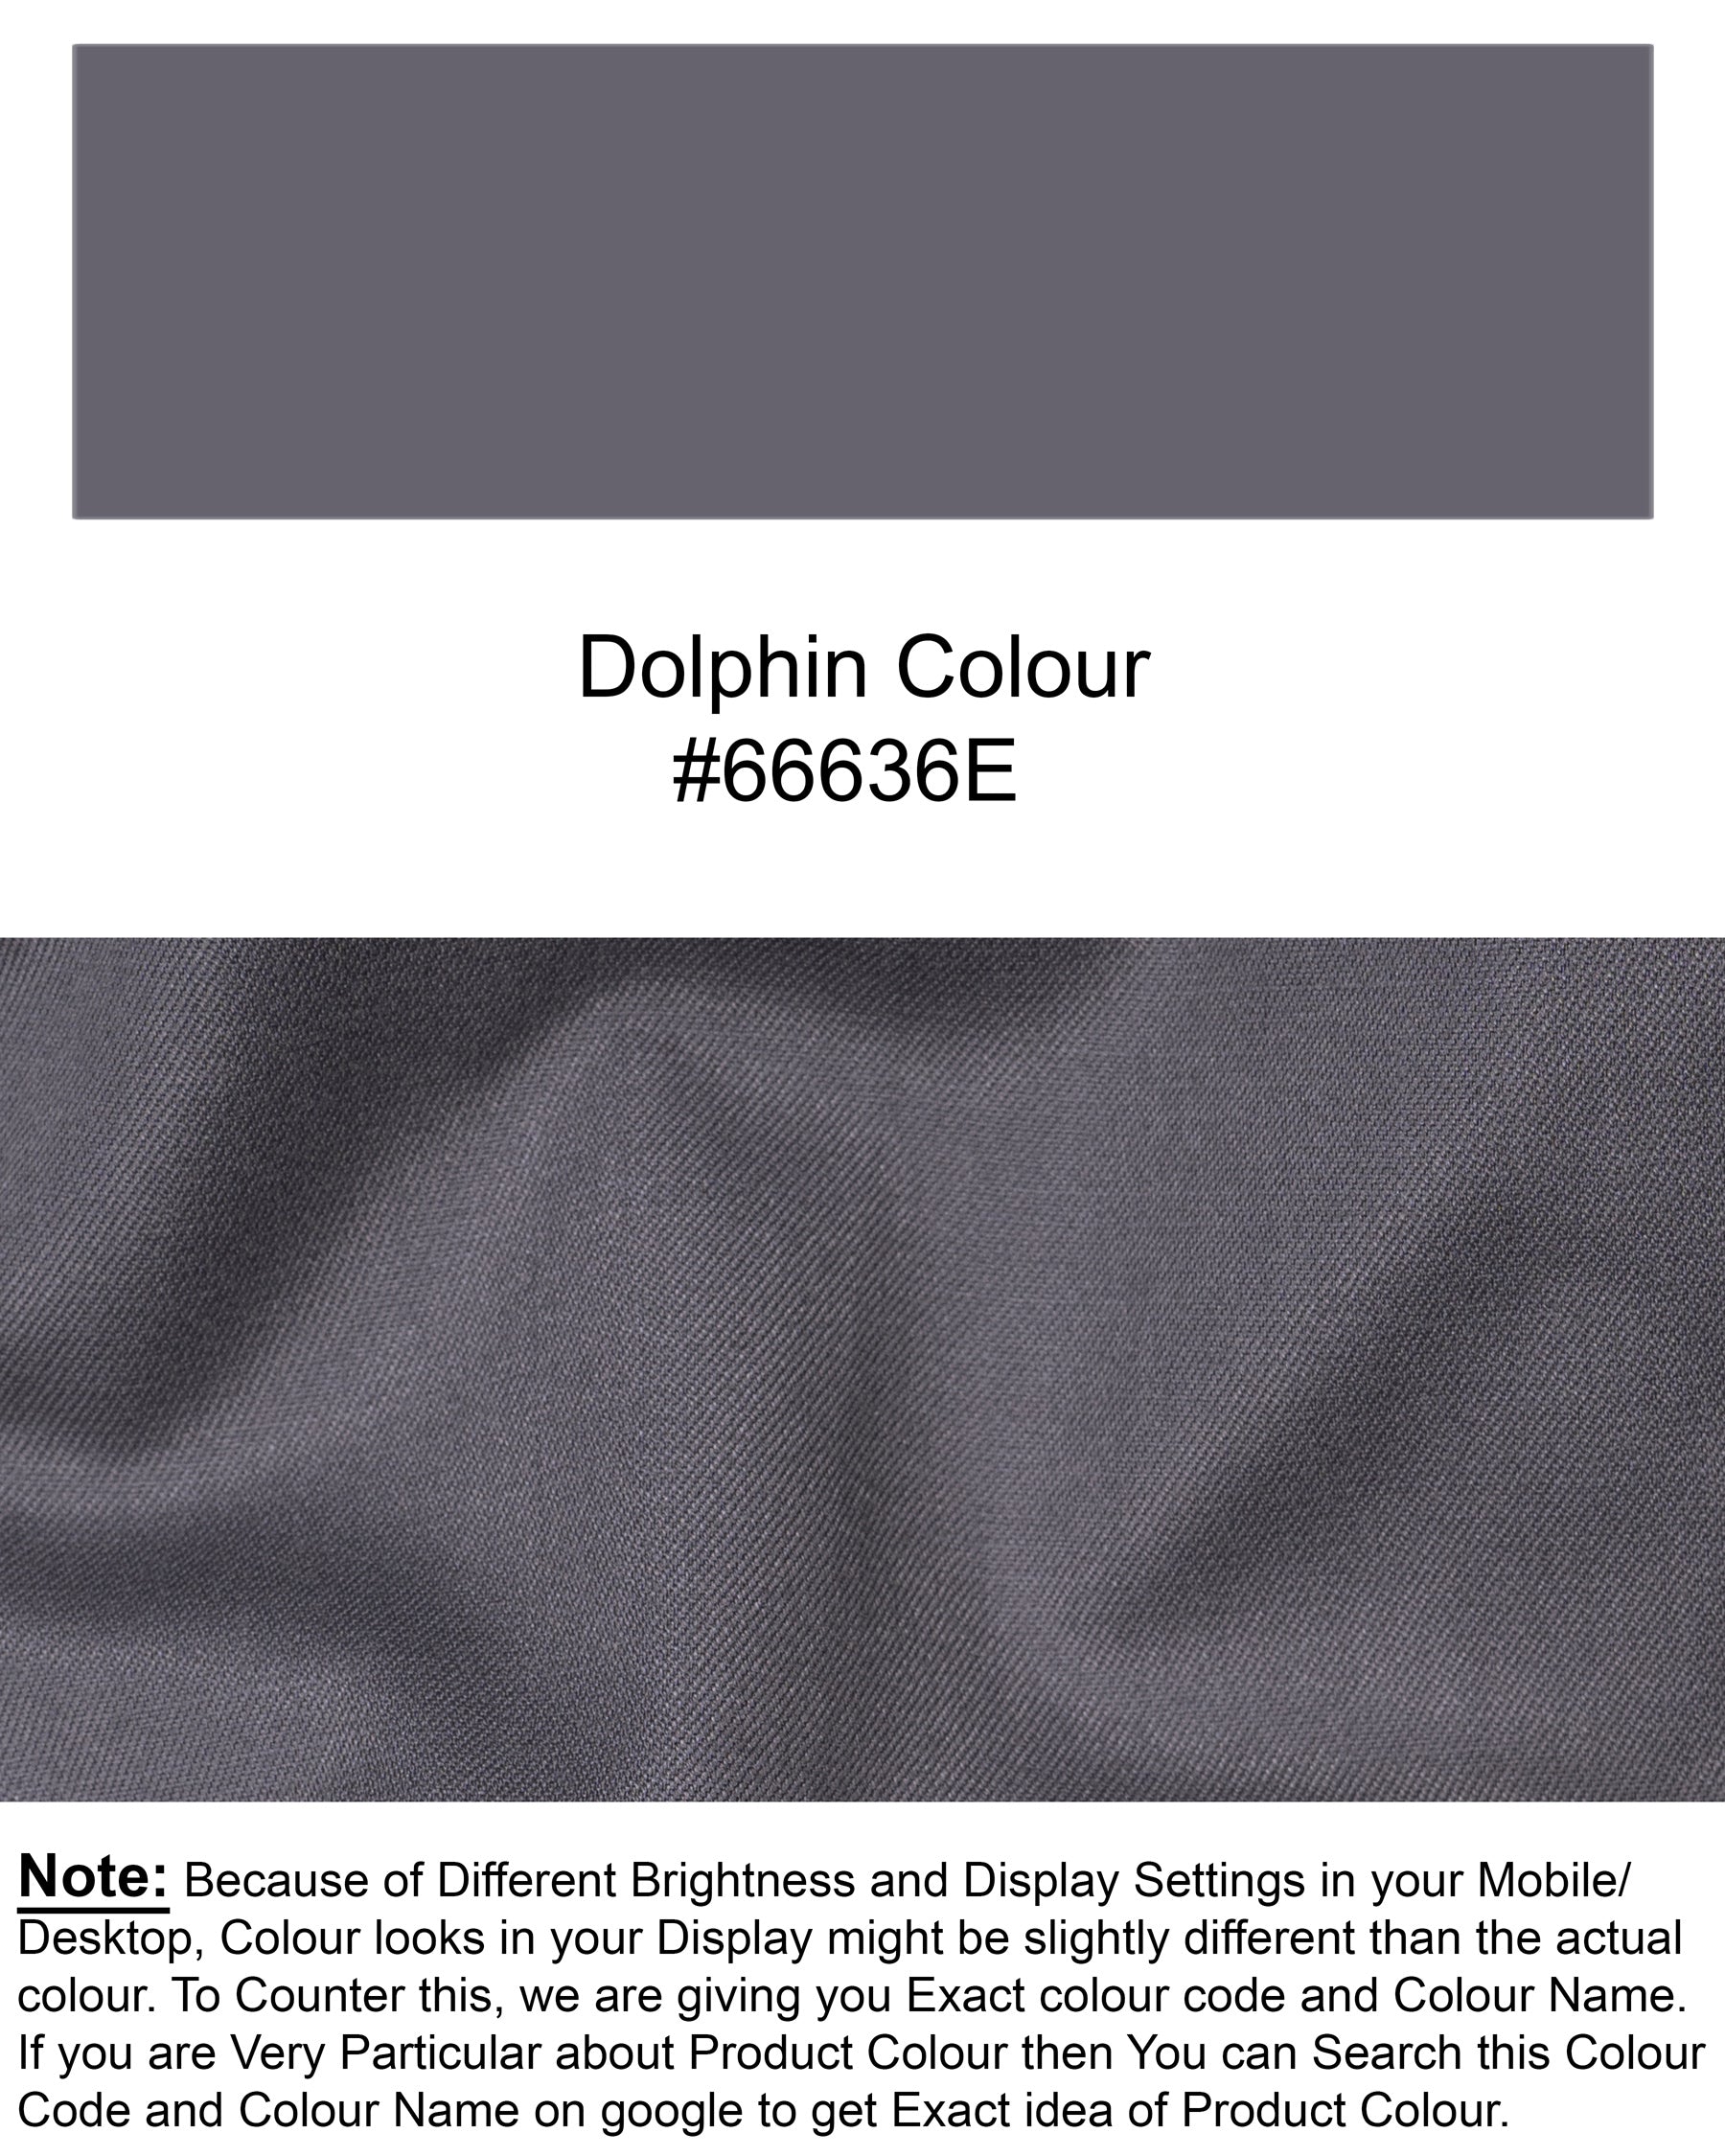 Dolphin Grey Wool Rich Blazer BL1399-SB-36, BL1399-SB-38, BL1399-SB-40, BL1399-SB-42, BL1399-SB-44, BL1399-SB-46, BL1399-SB-48, BL1399-SB-50, BL1399-SB-52, BL1399-SB-54, BL1399-SB-56, BL1399-SB-58, BL1399-SB-60